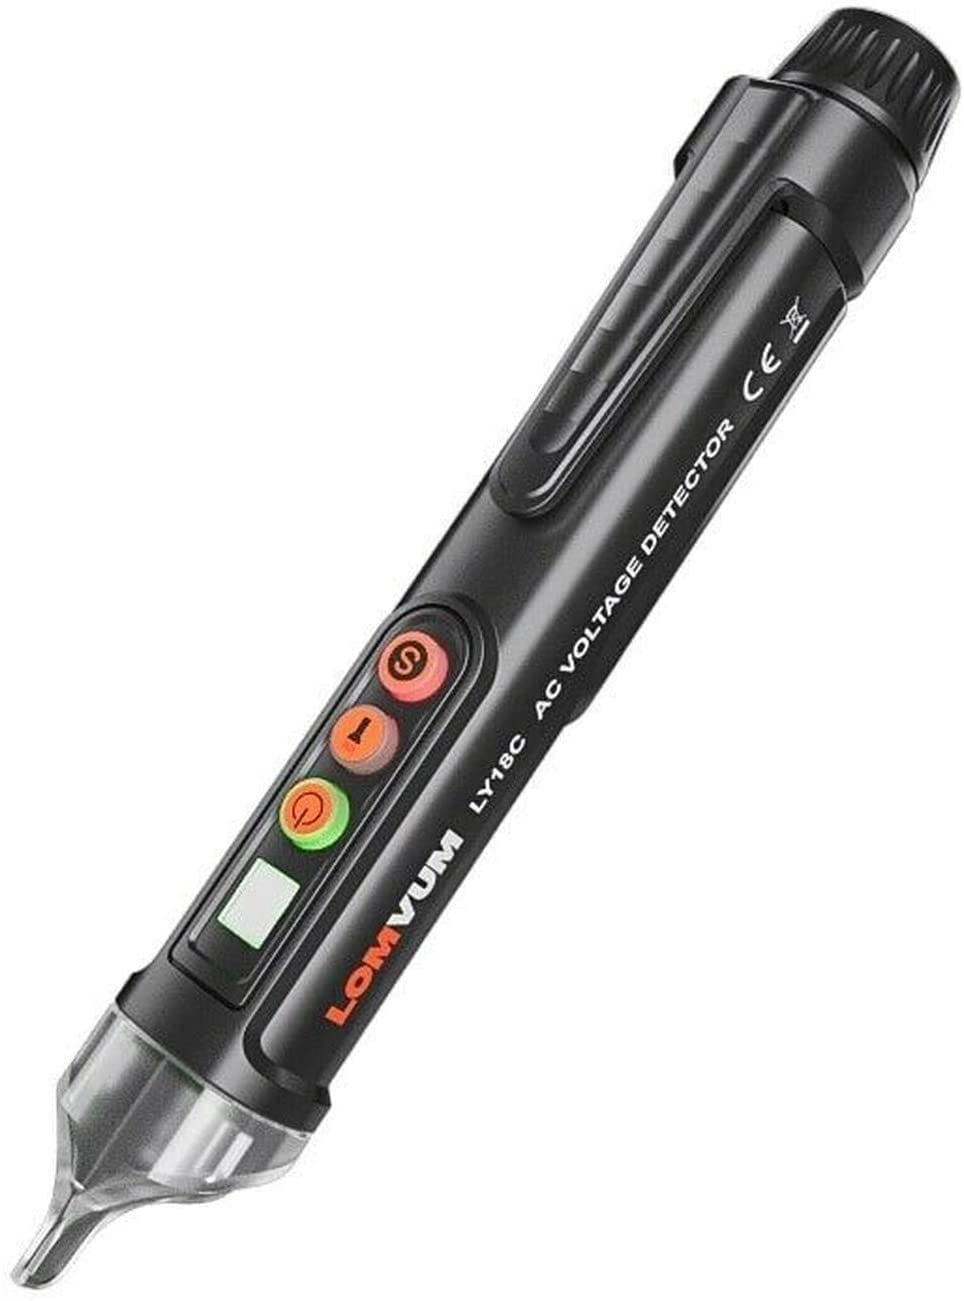 Voltage Test Pencil AC 12V-1000V Voltage Sensitivity Compact Electric Pen 